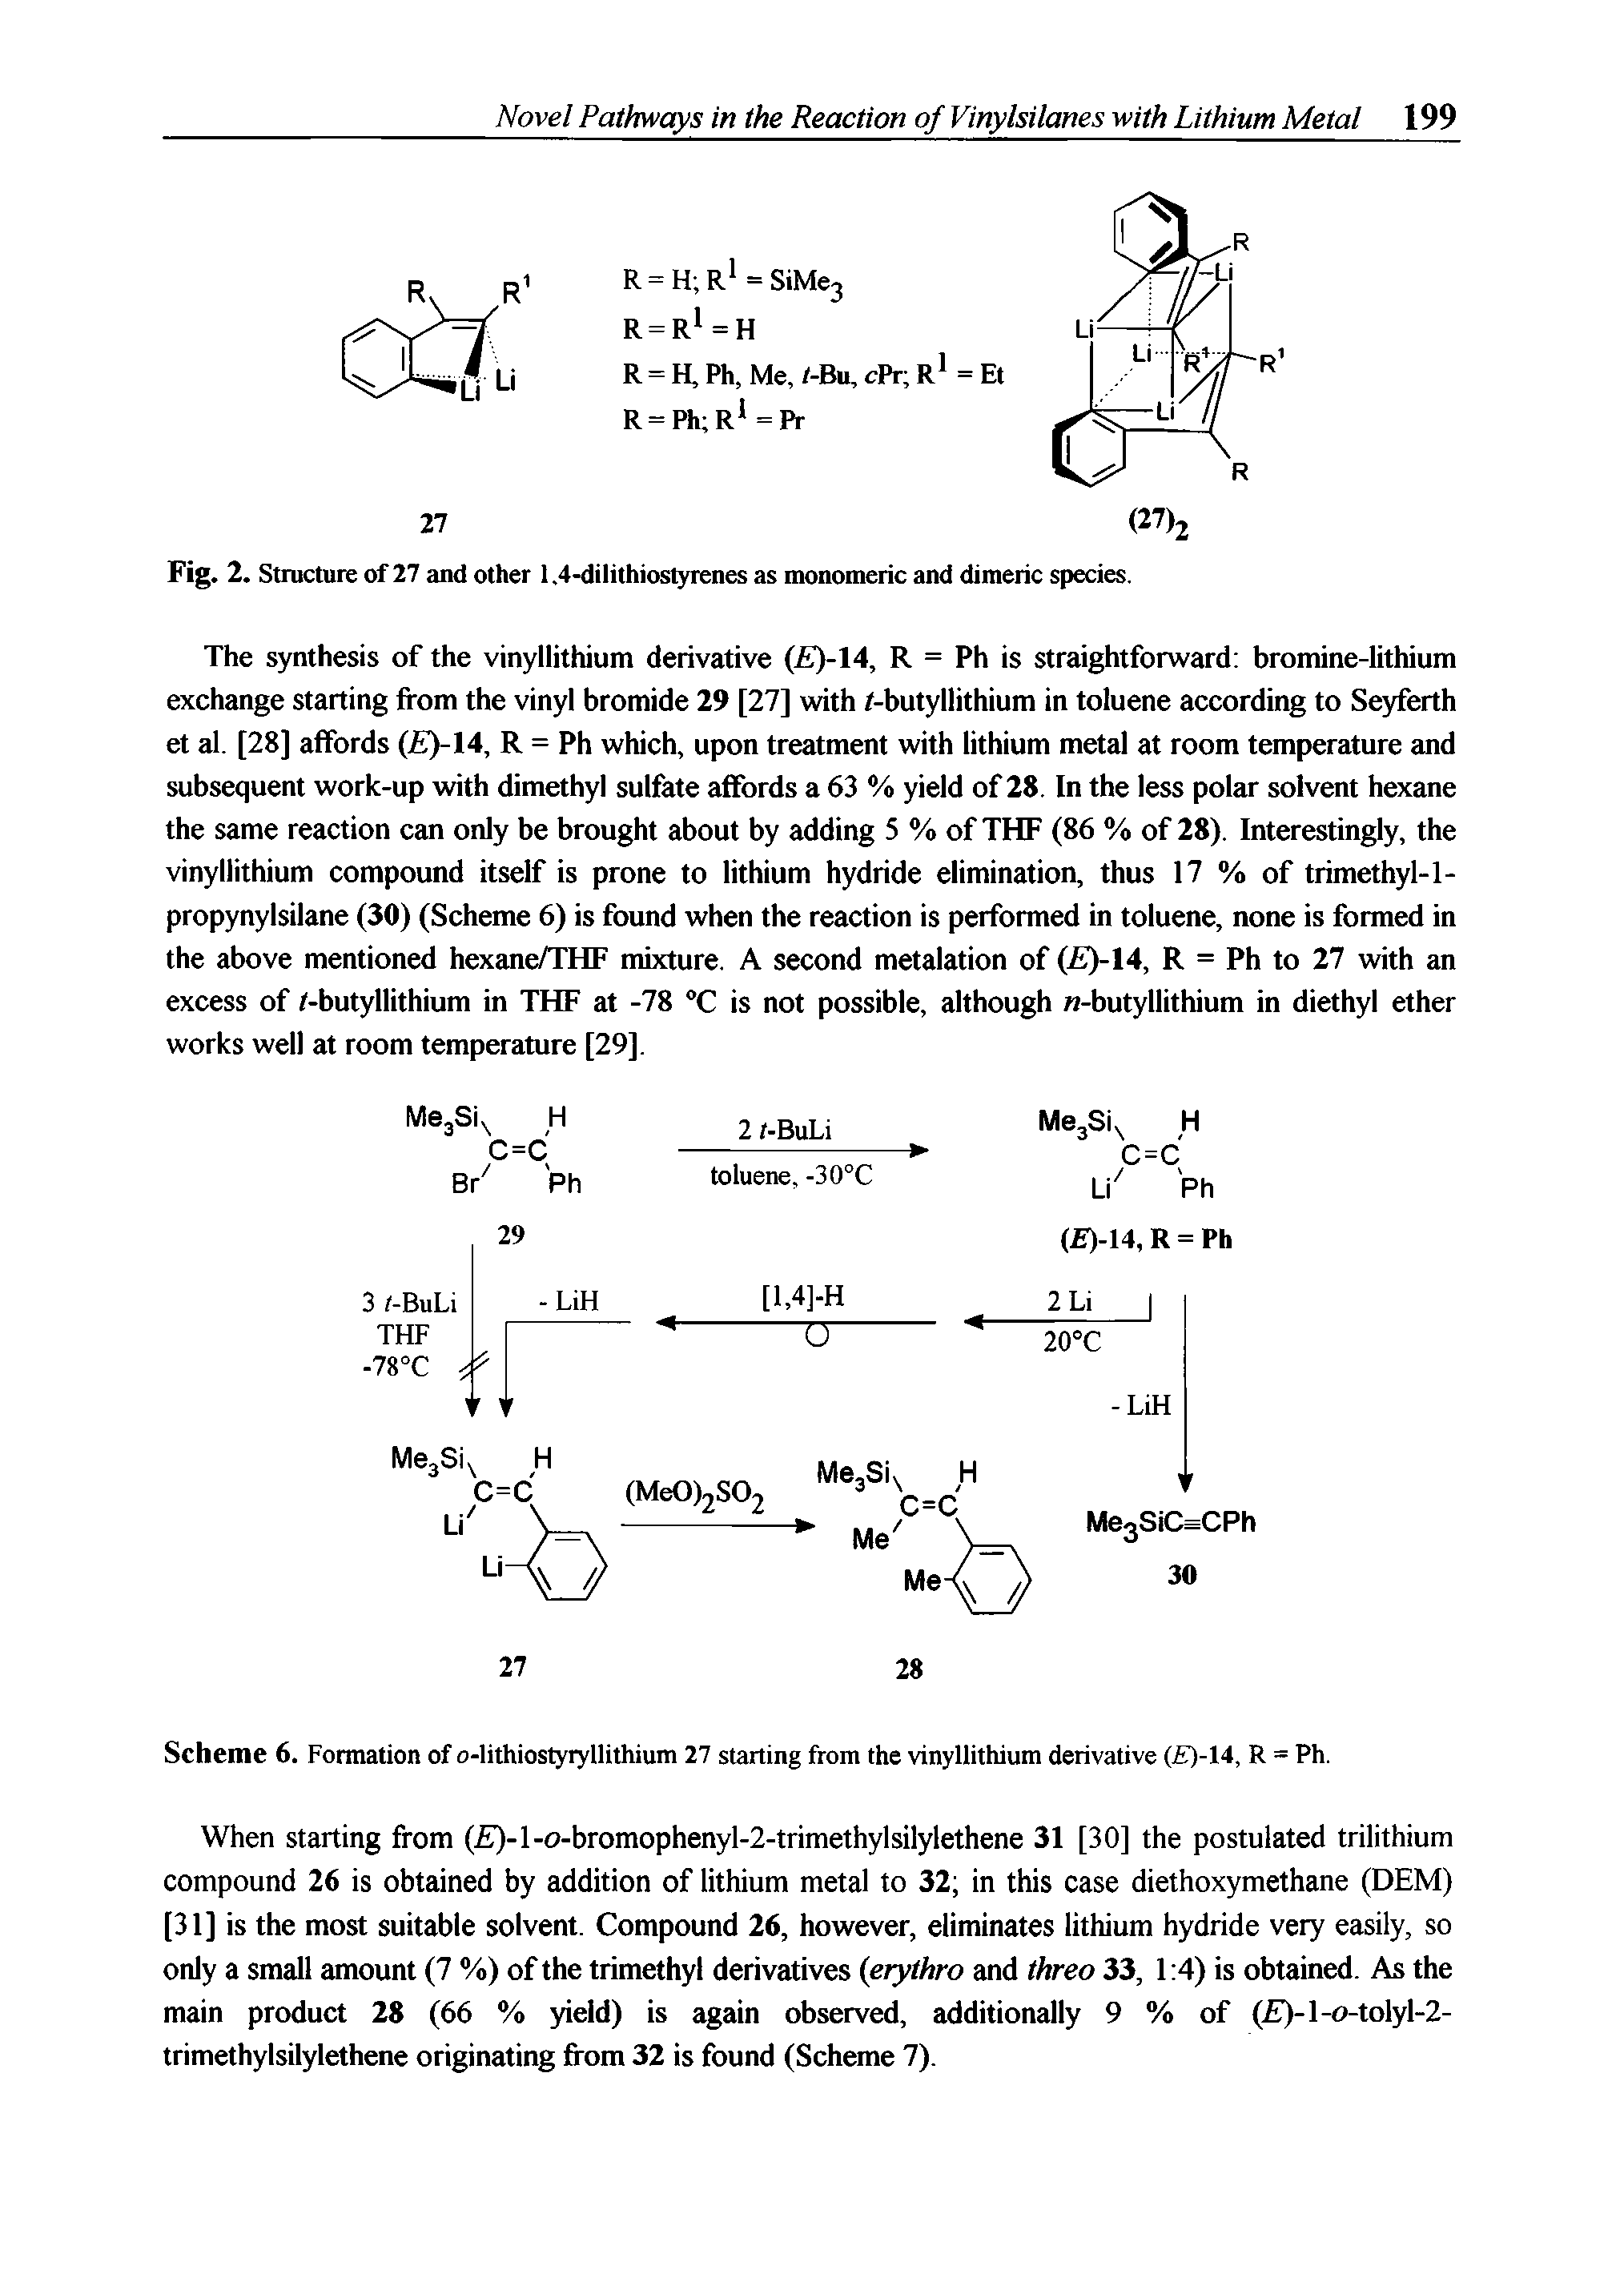 Scheme 6. Formation of o-lithiostyryllithium 27 starting from the vinyllithium derivative ( )-14, R = Ph.